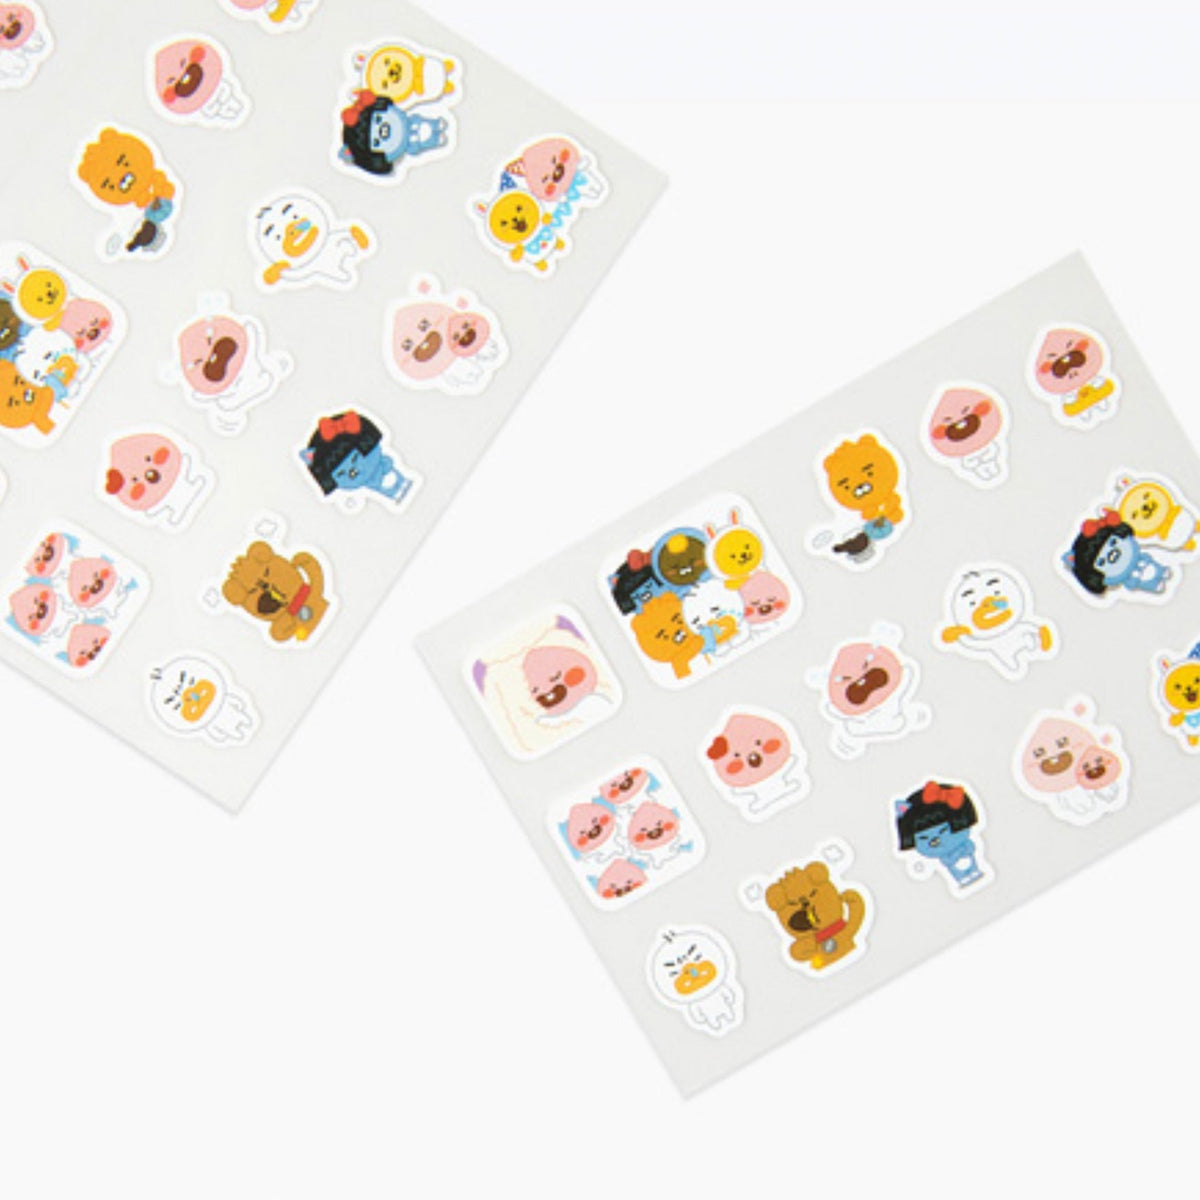 little FRIENDS Cute Character Petit Sticker Pack for Kids - SkoopMarket